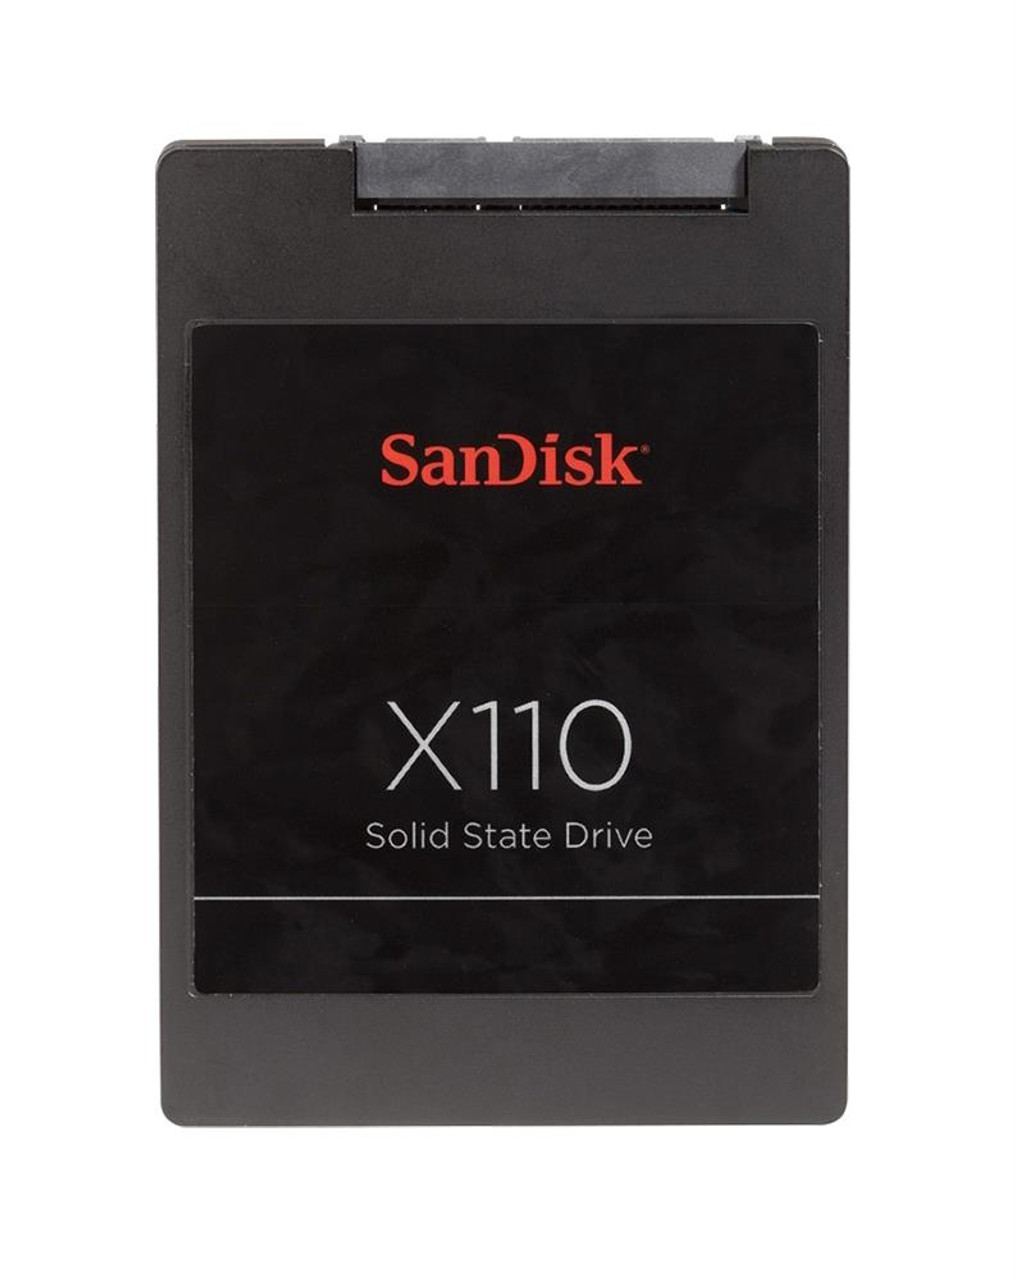 SD6SB1M-128G SanDisk X110 128GB MLC SATA 6Gbps 2.5-inch Internal Solid State Drive (SSD)